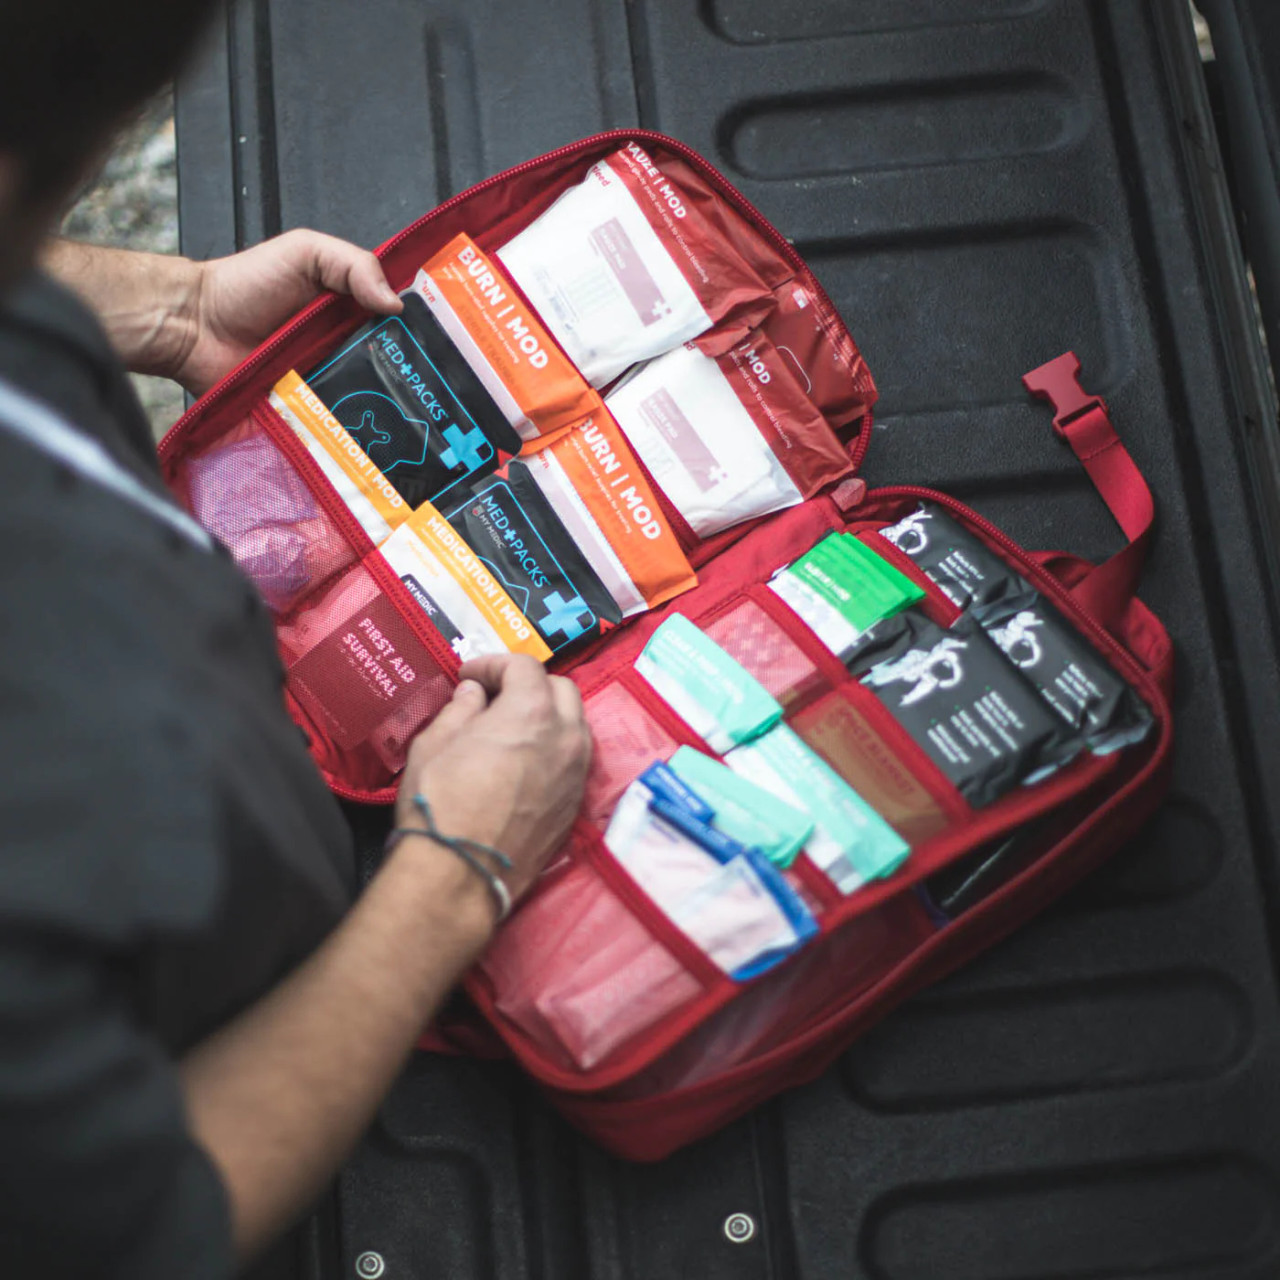 First Aid Kit - My Medic "MyFAK Large" - Pro Edition